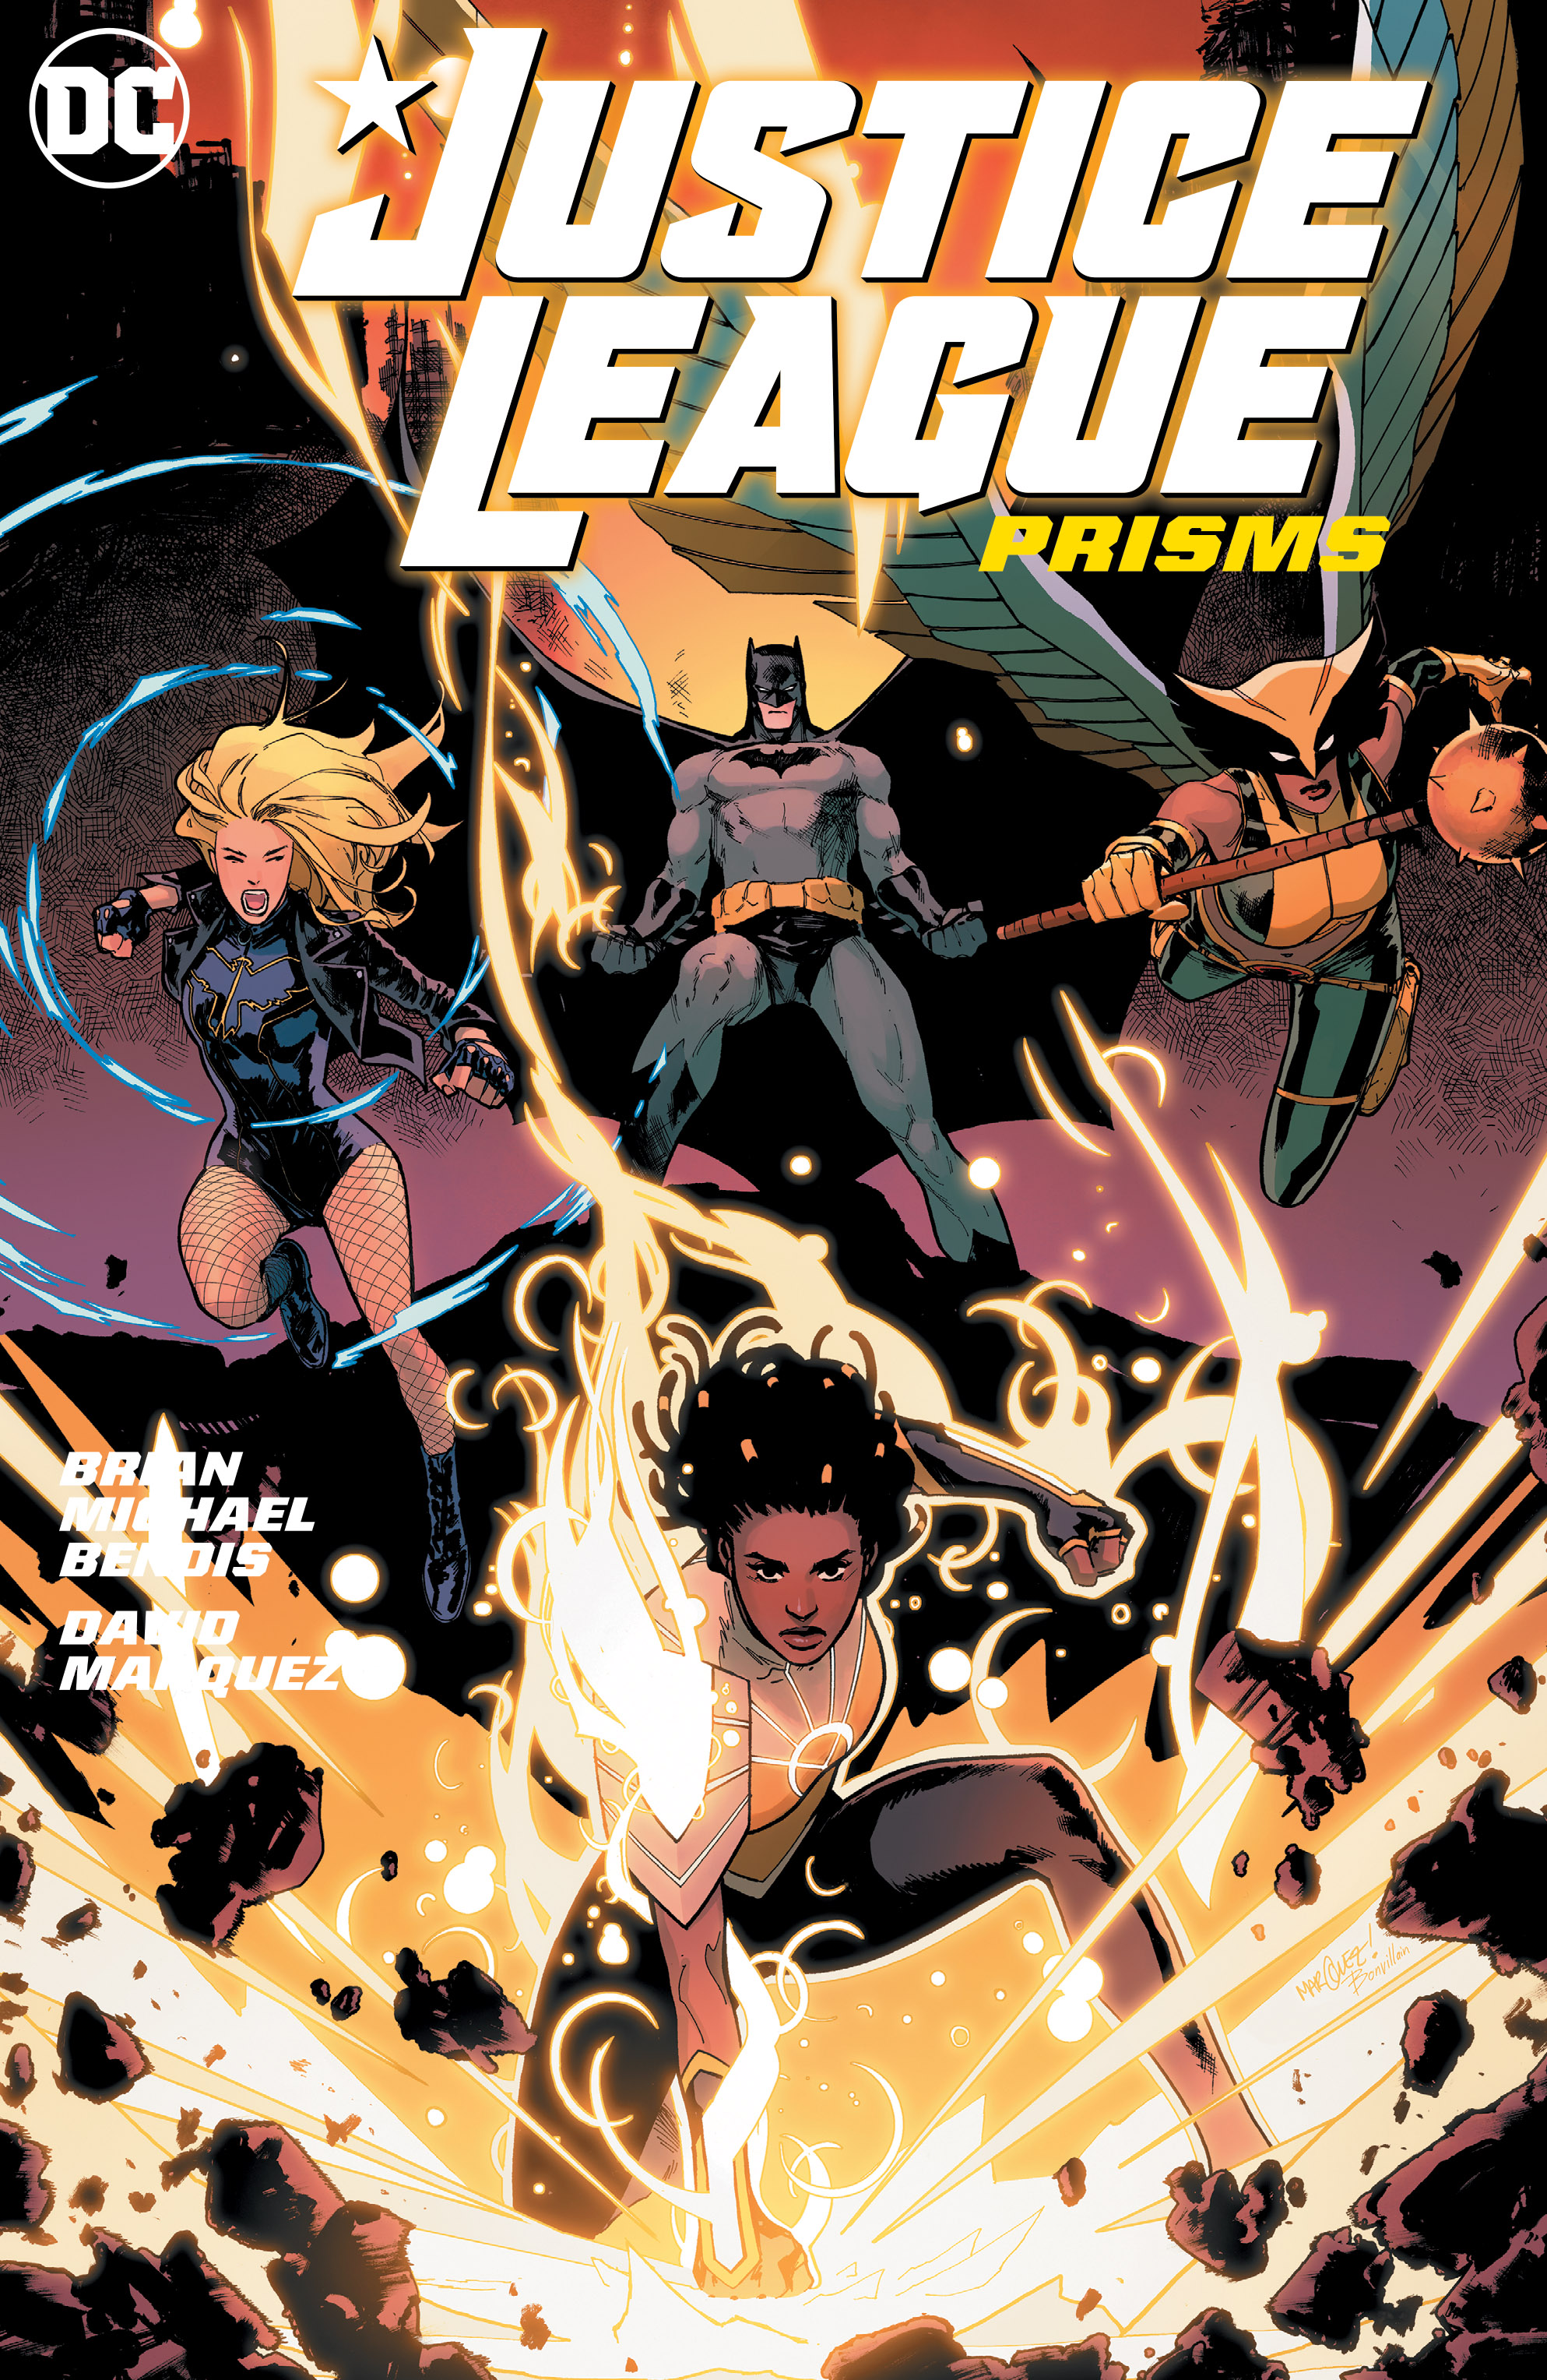 Justice League Hardcover Volume 1 Prisms (2021)